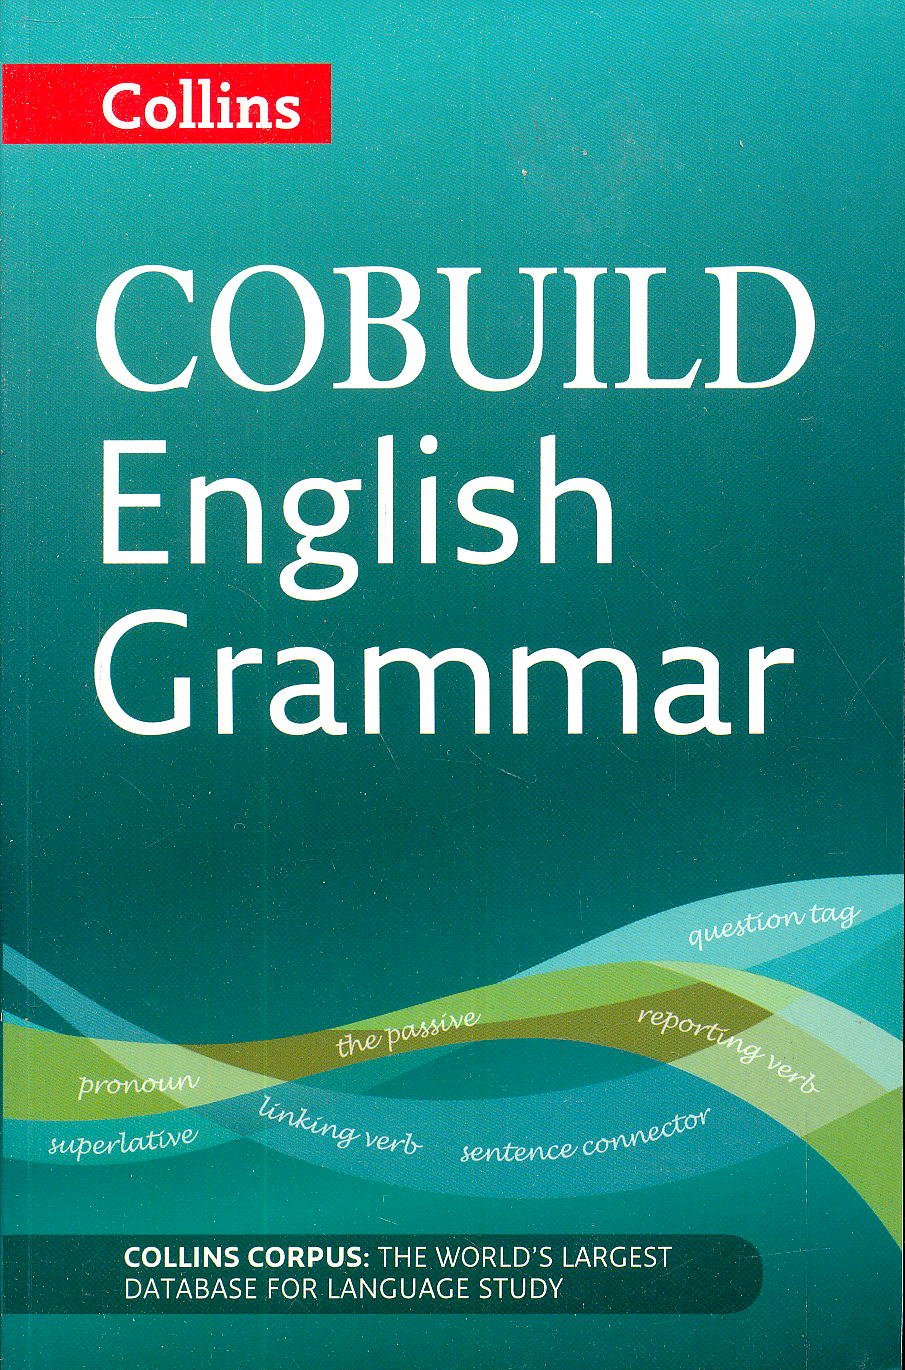 Collins Cobuild English Grammar柯林斯COBUILD英语语法词典 英文原版 mobi格式下载